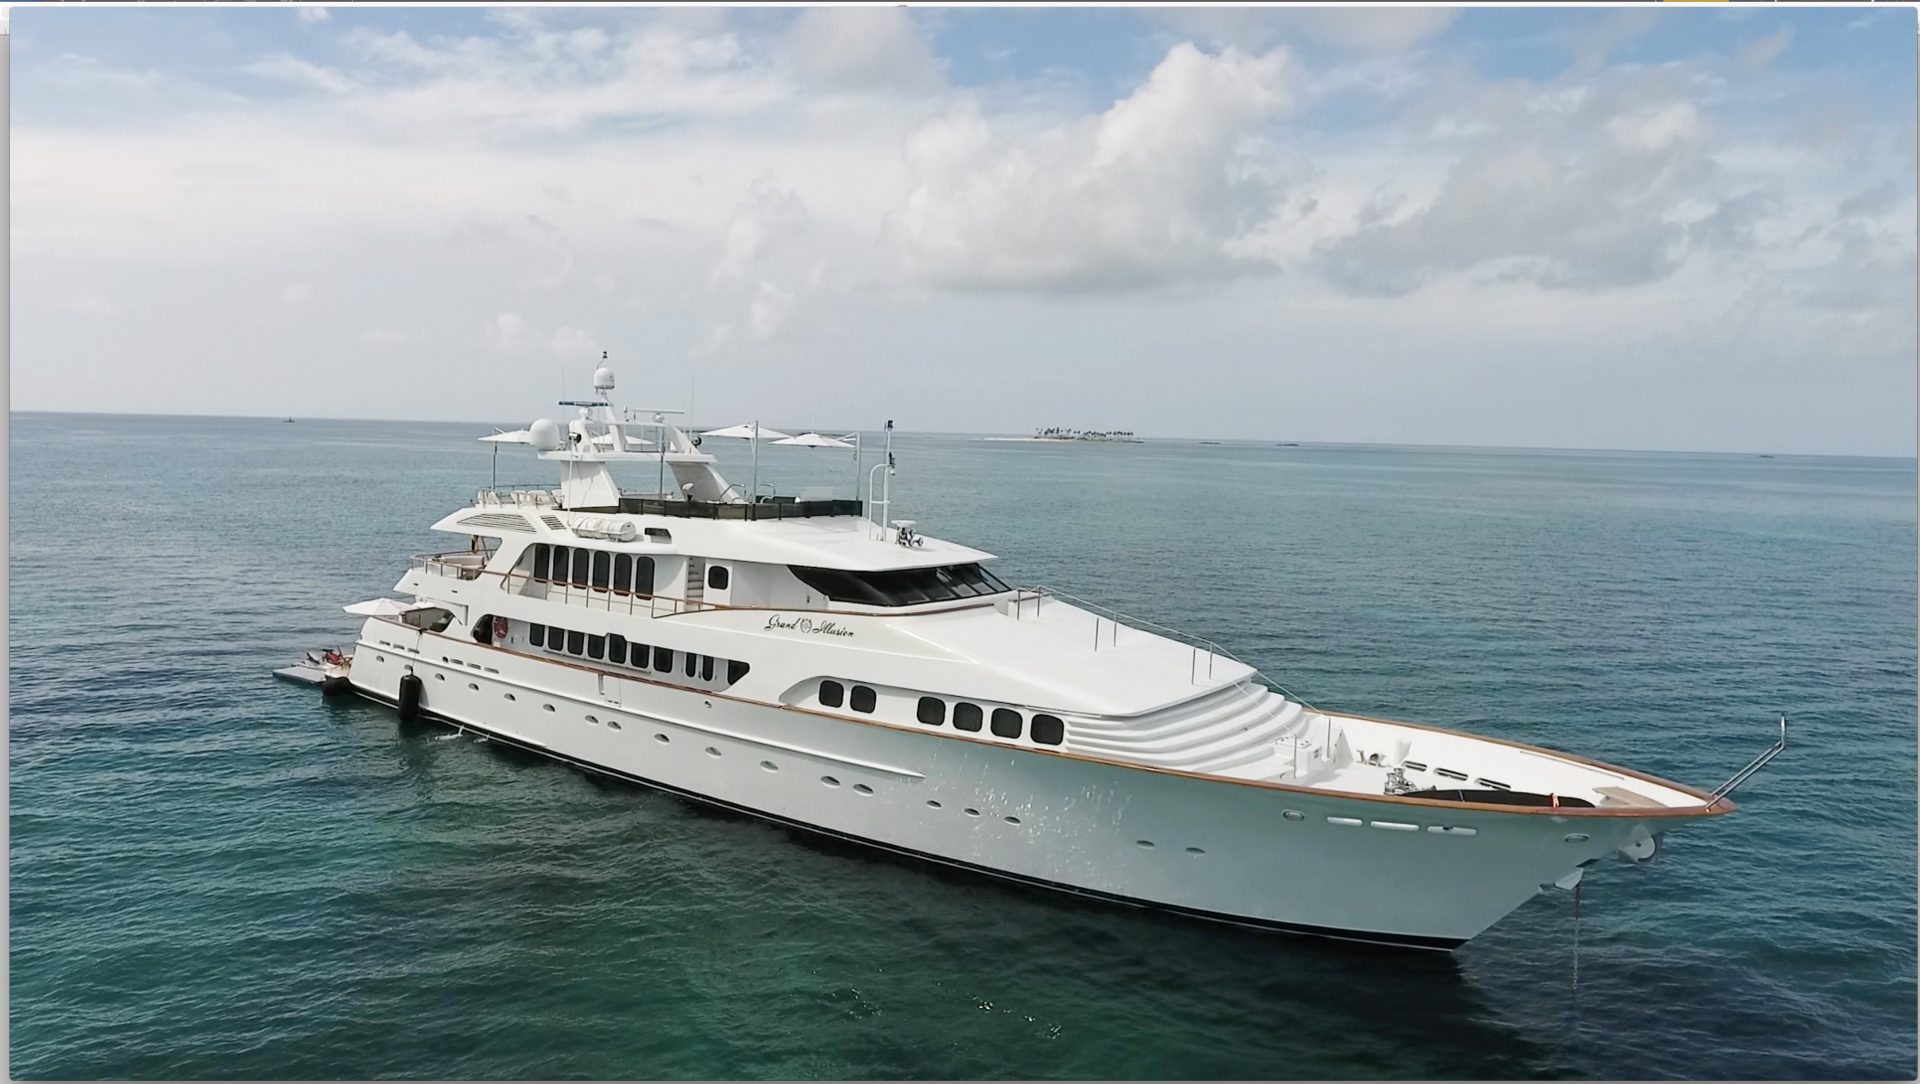 GRAND ILLUSION yacht Charter Brochure